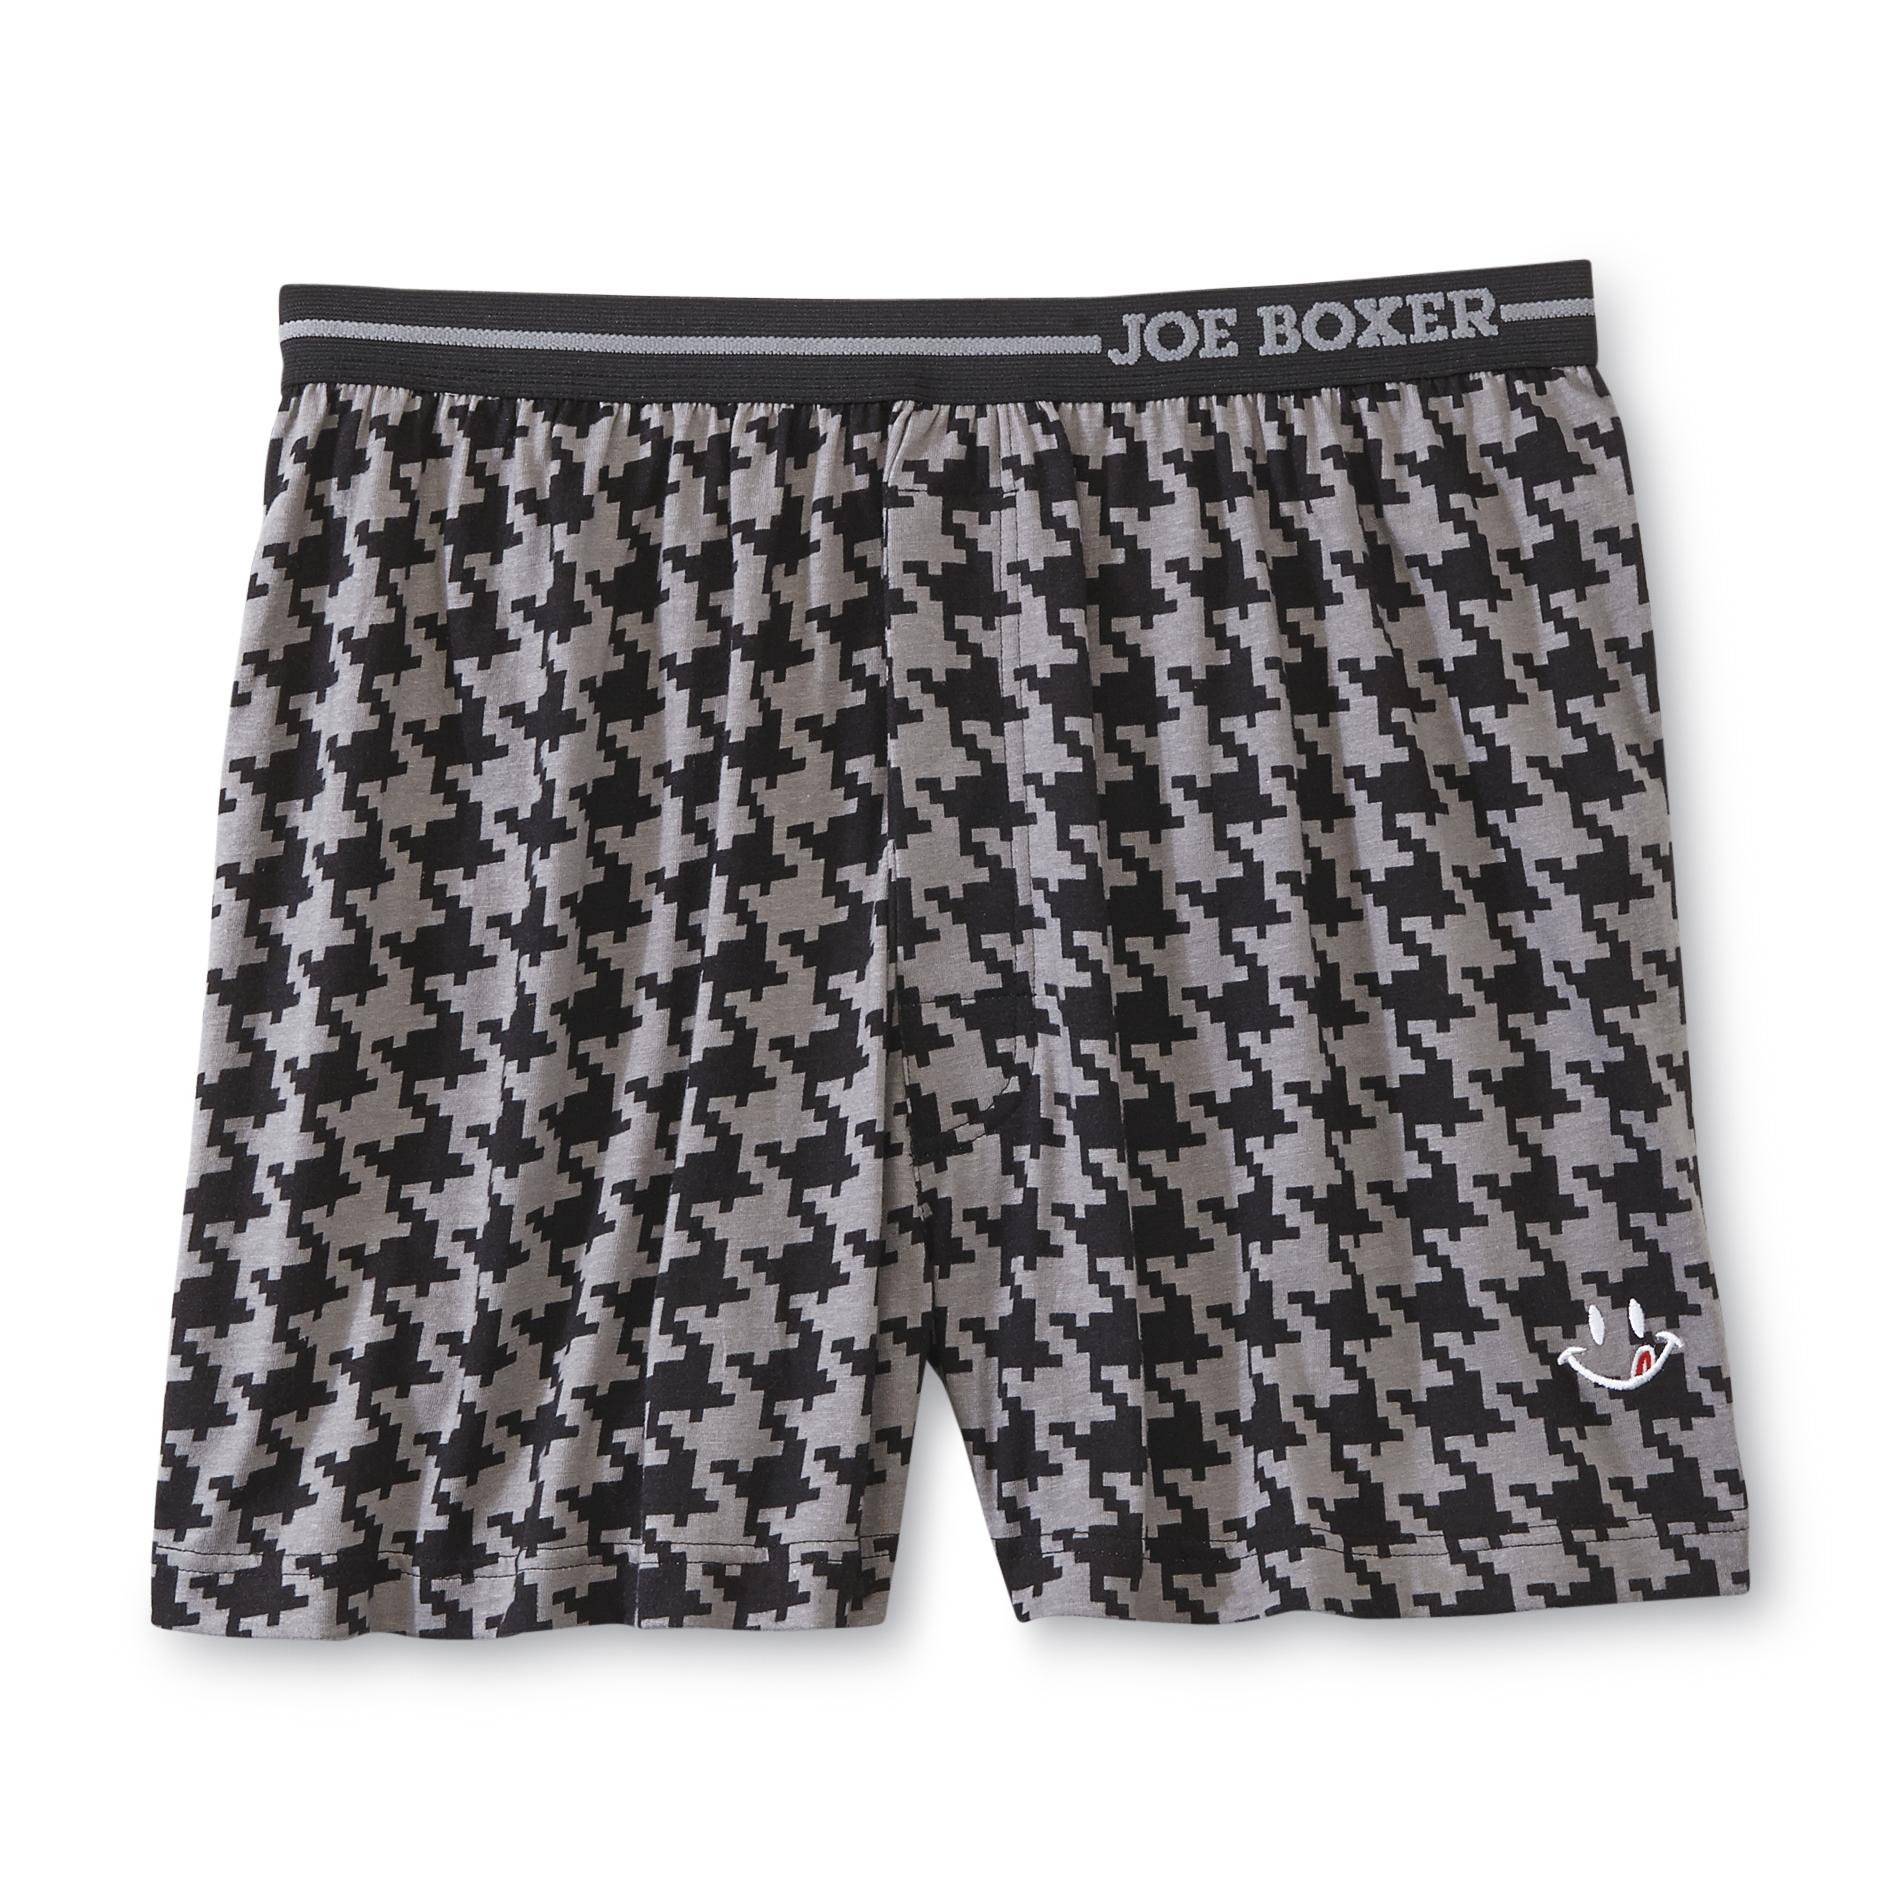 Joe Boxer Men's Knit Boxer Shorts - Houndstooth Check